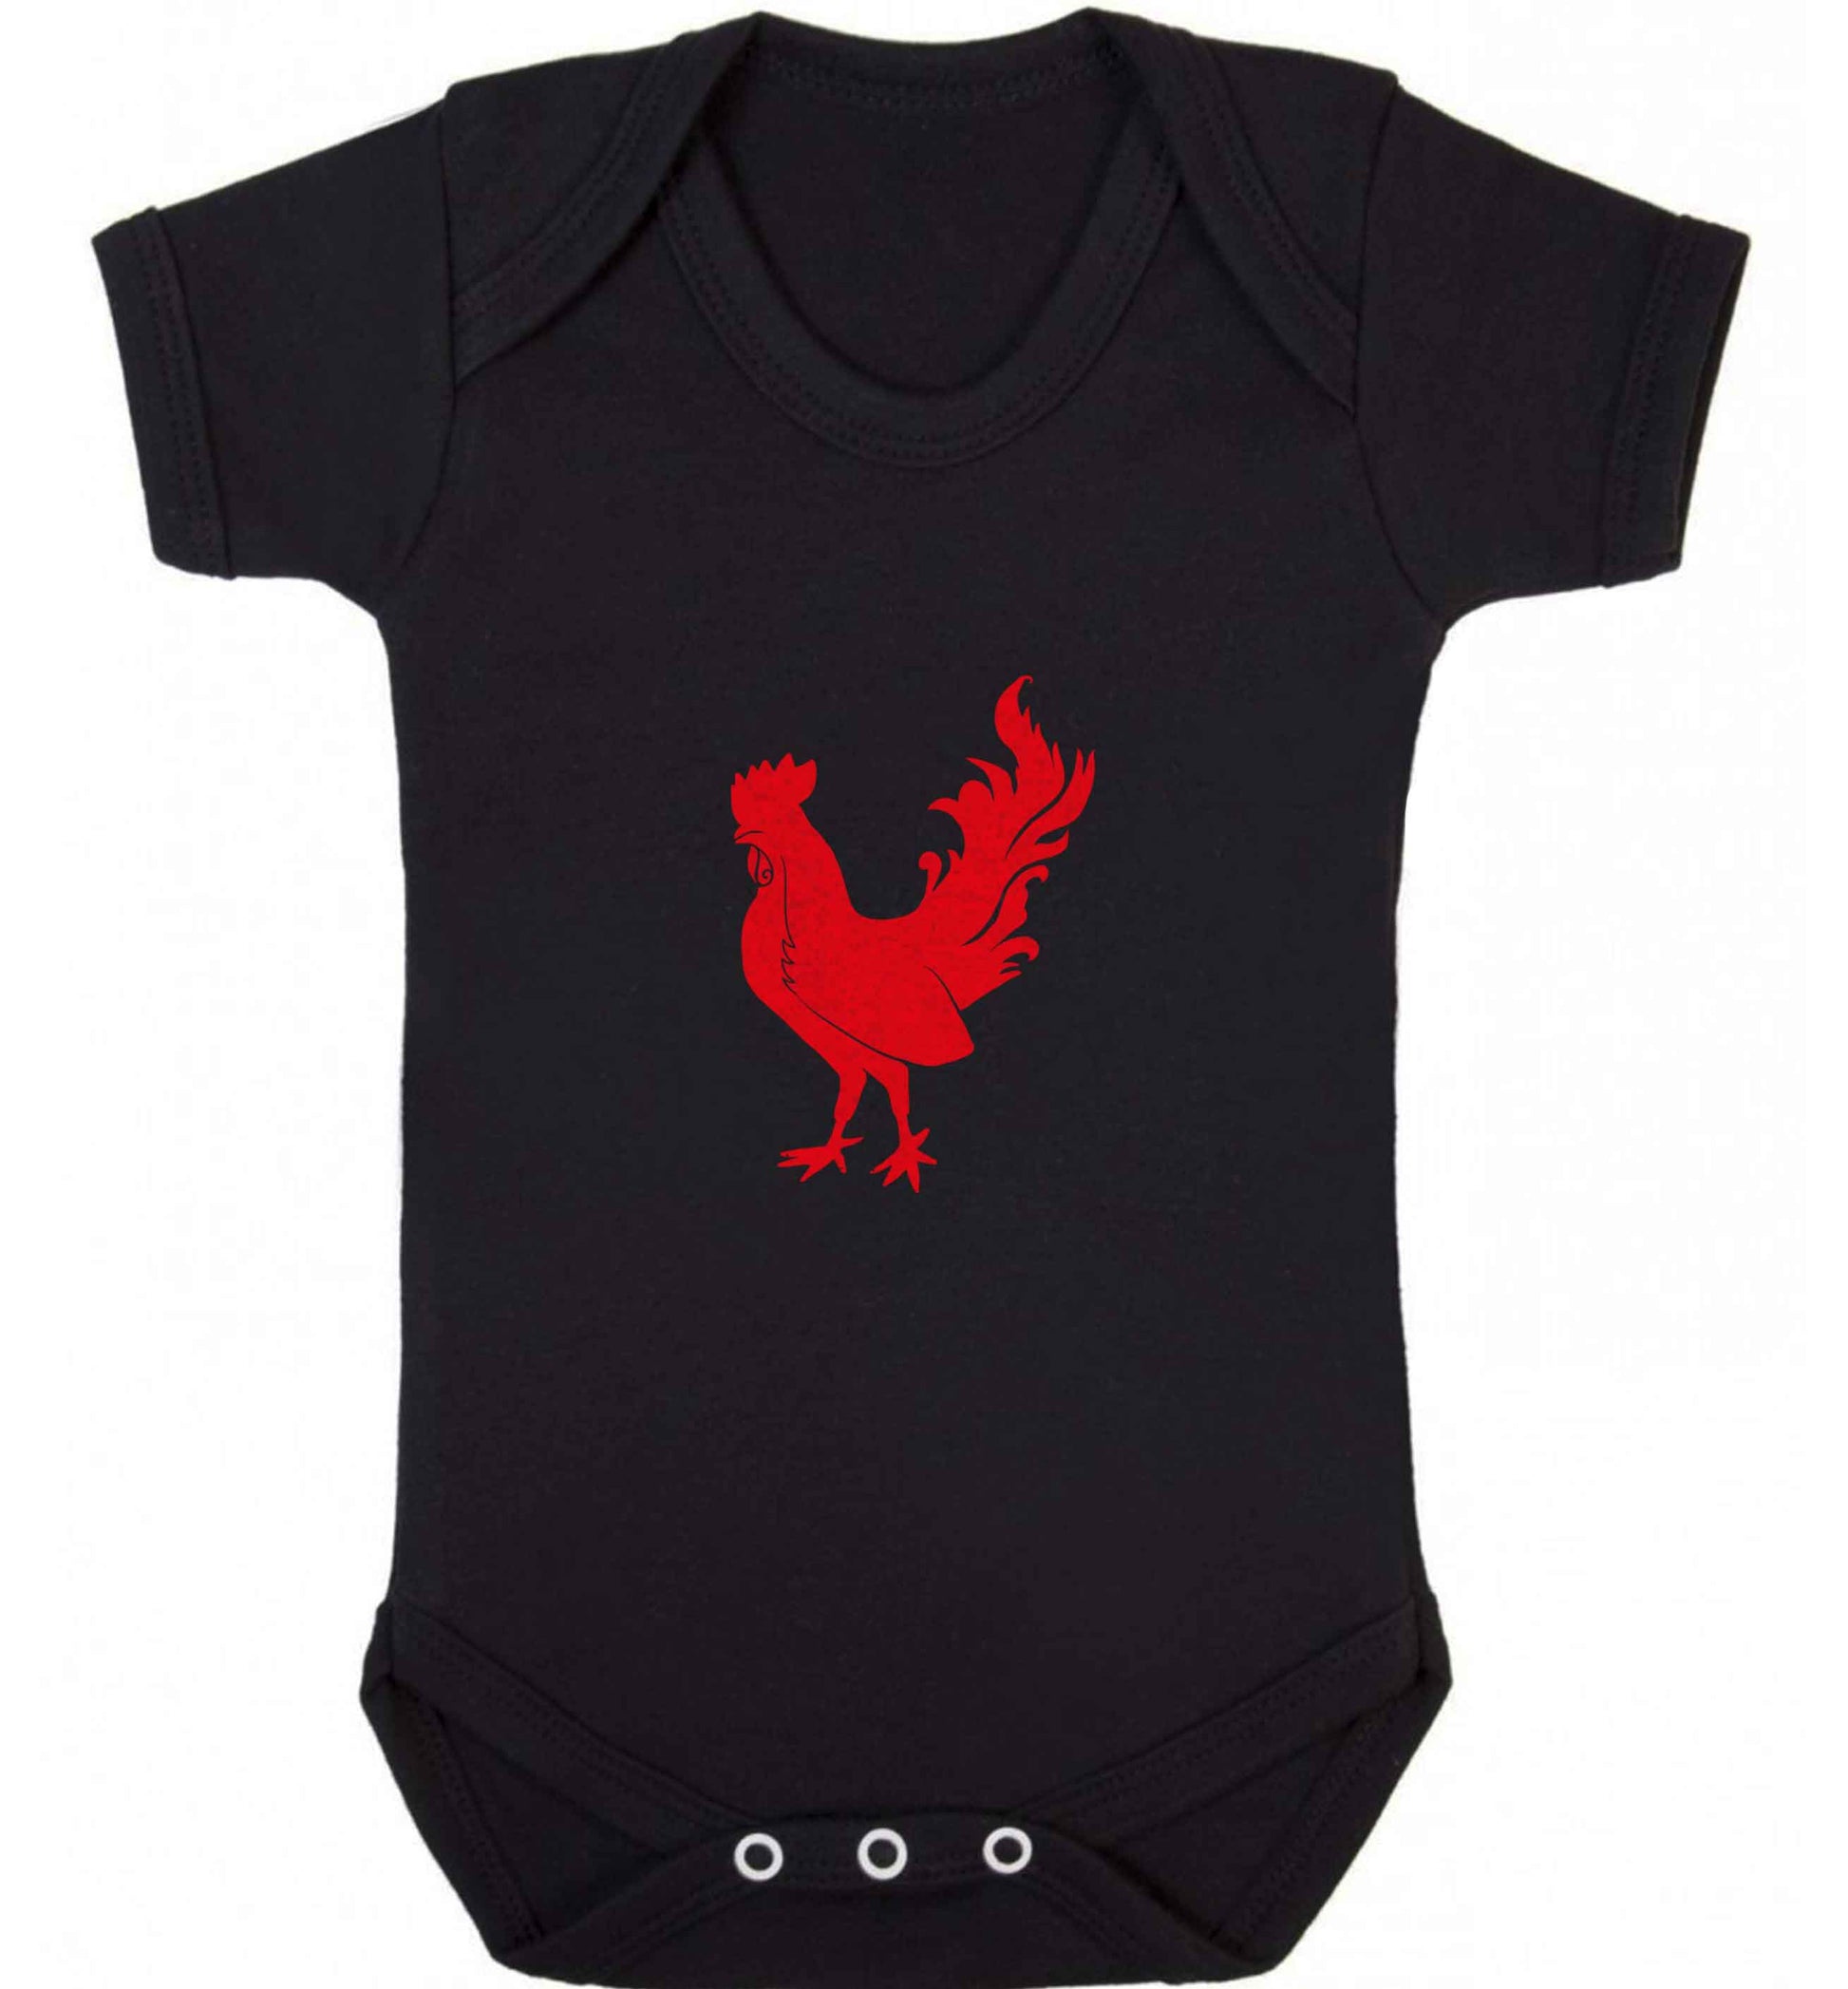 Rooster baby vest black 18-24 months